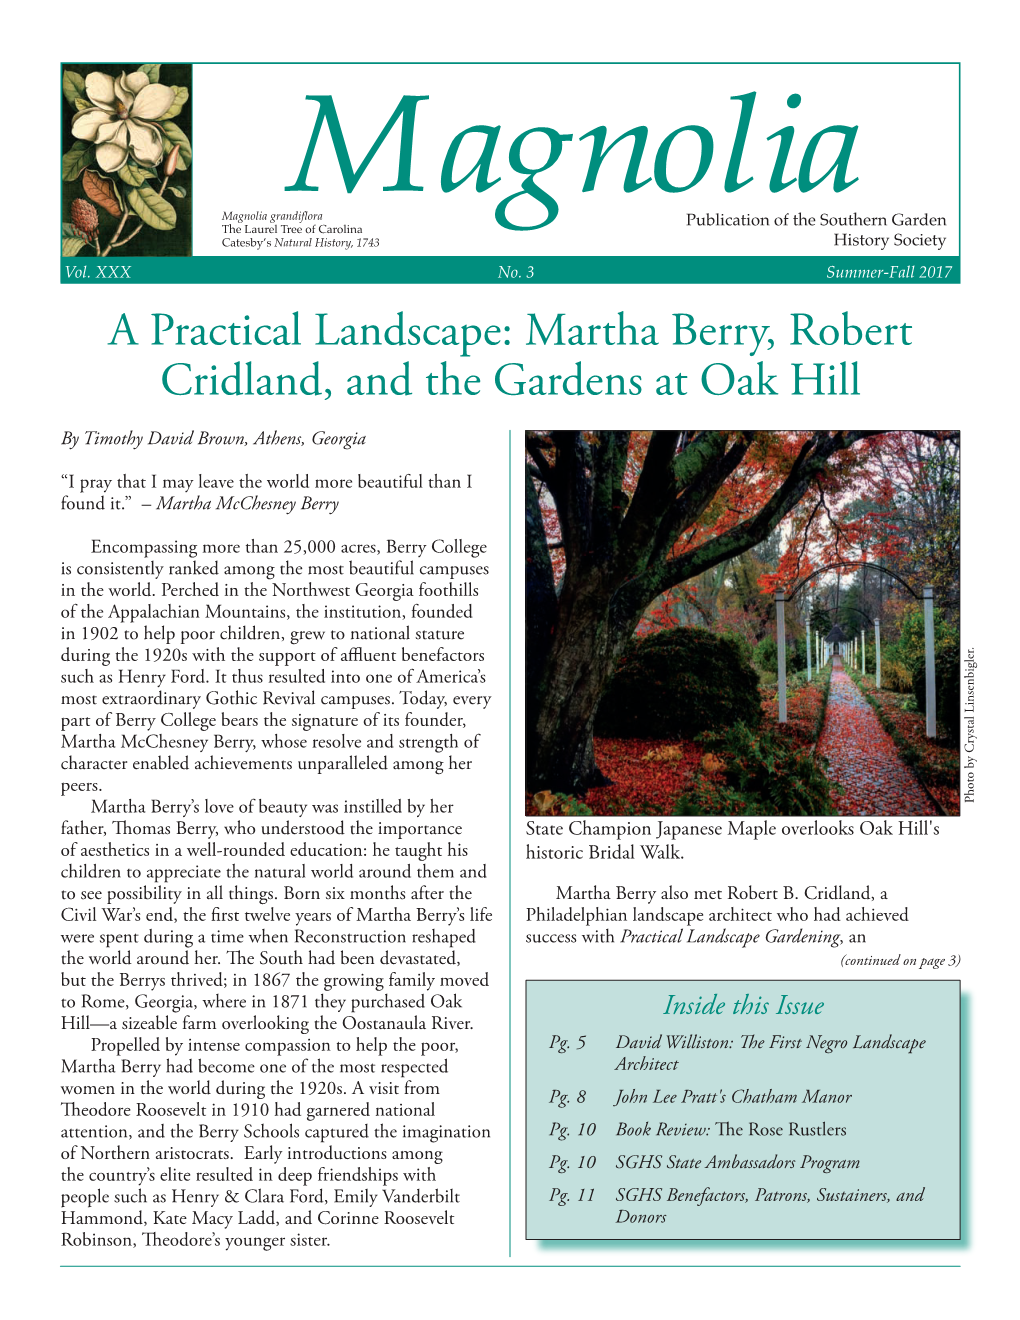 A Practical Landscape: Martha Berry, Robert Cridland, and the Gardens at Oak Hill